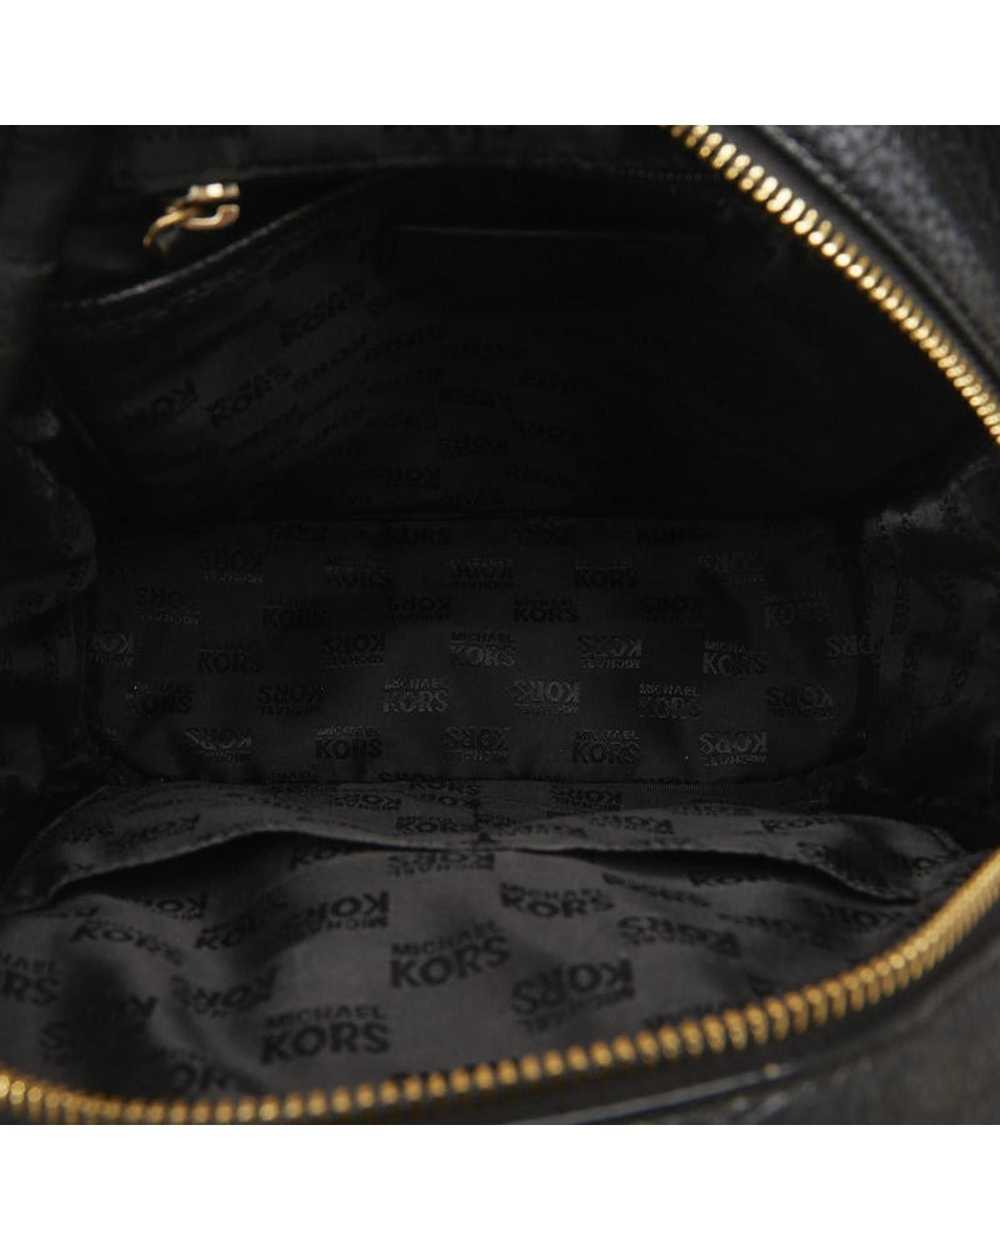 Michael Kors Studded Leather Abbey Backpack Bag - image 6